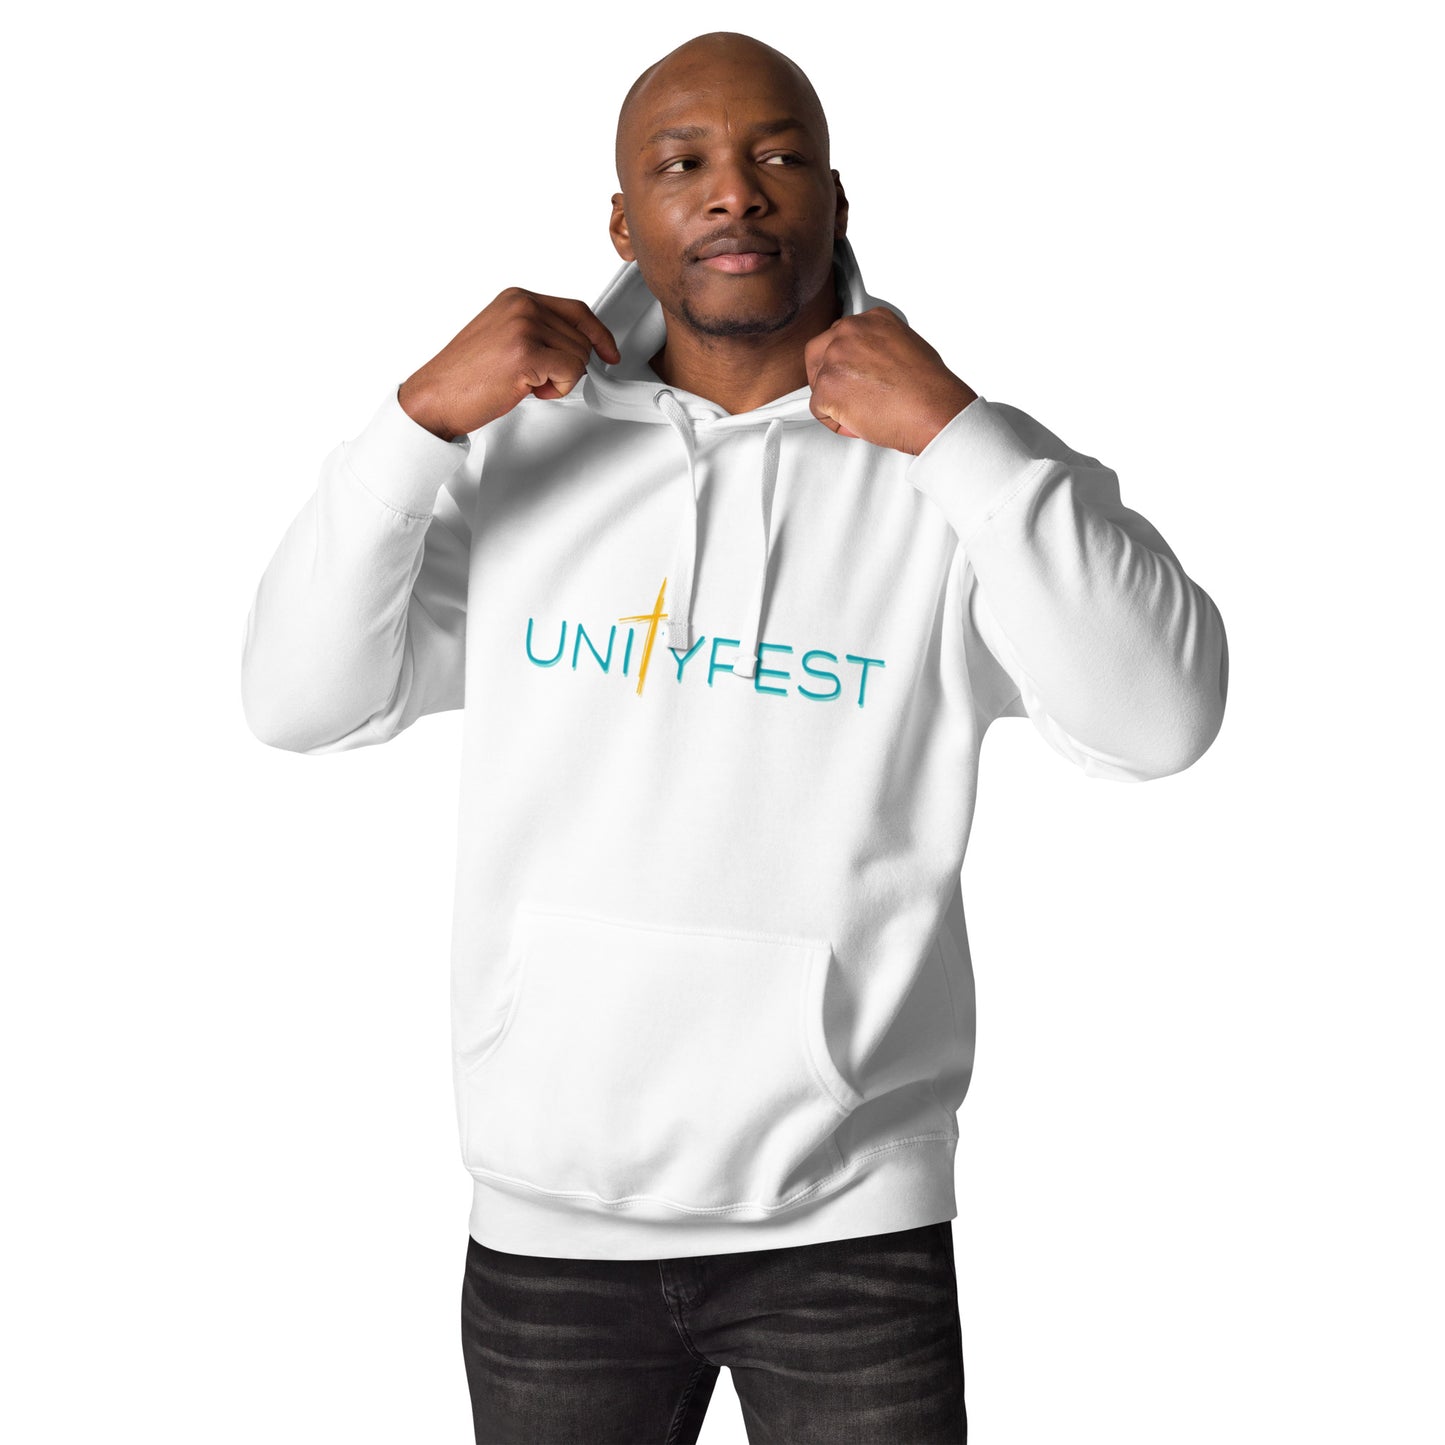 Unityfest Traditional Logo Hoodie